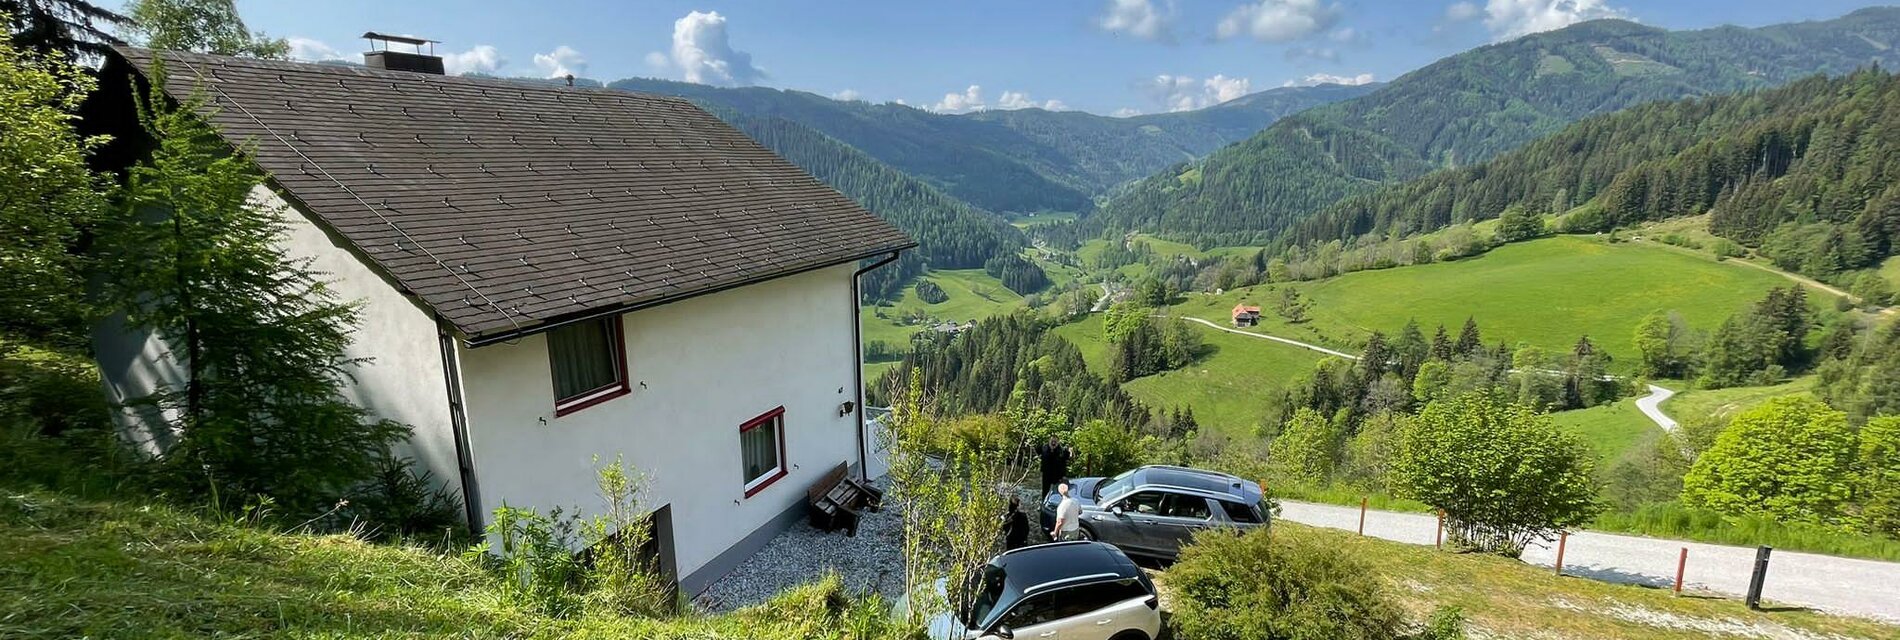 PölstalerBerghütte-Außenansicht-Murtal-Steiermark